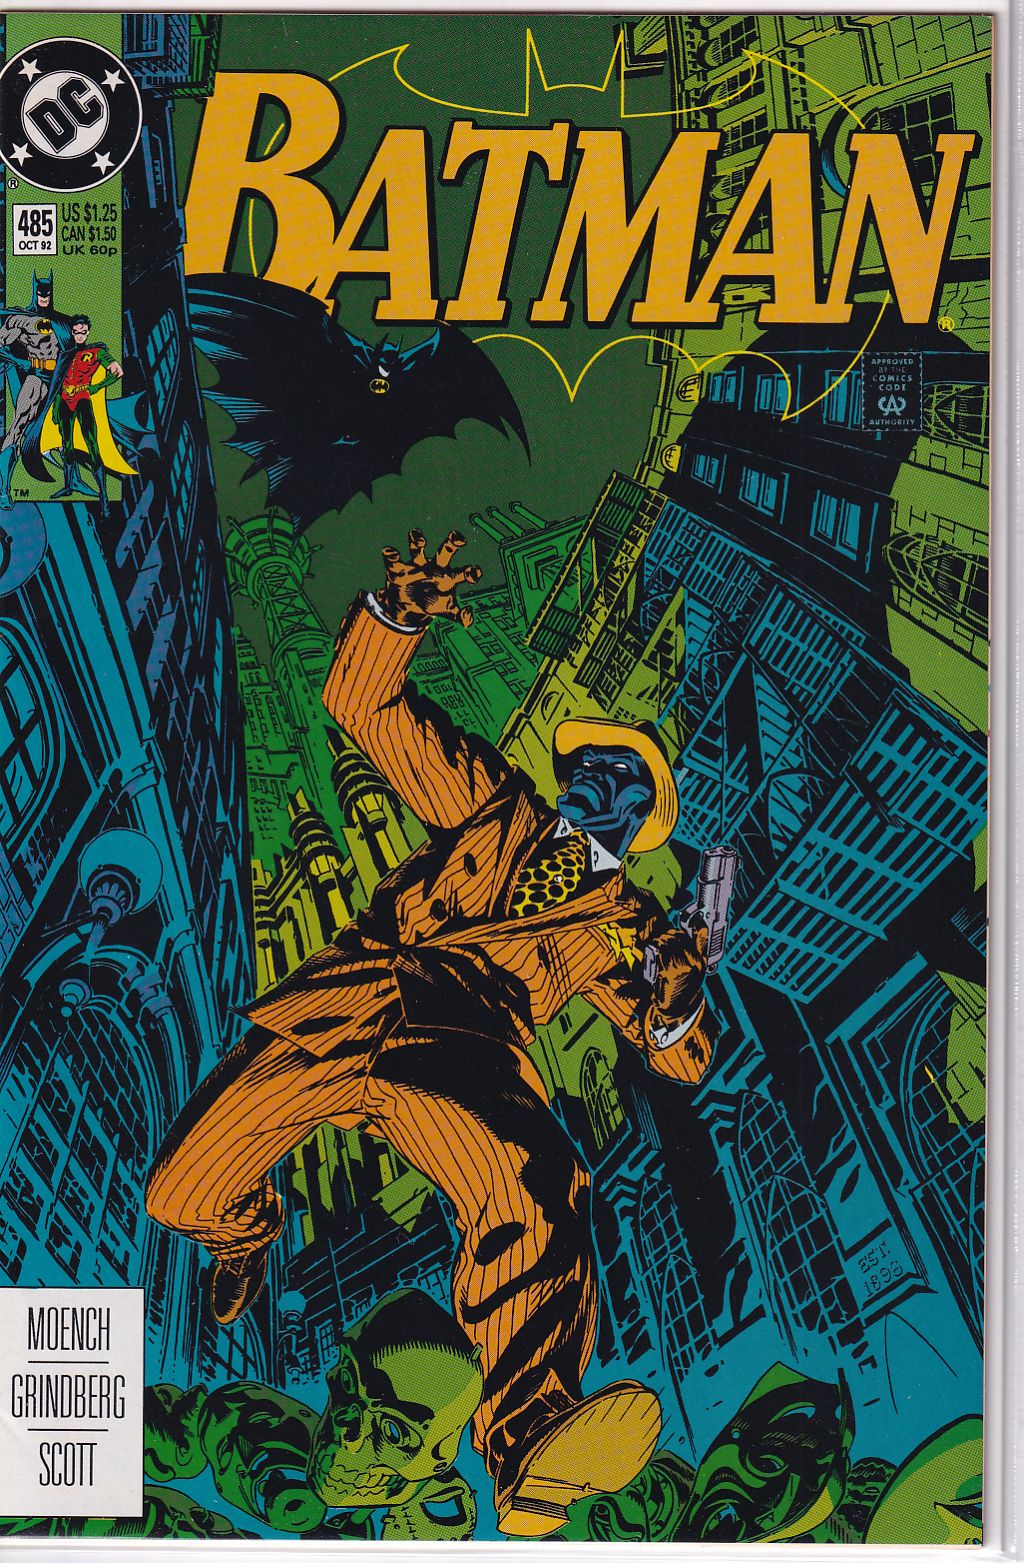 BATMAN (1940) #485 VF+